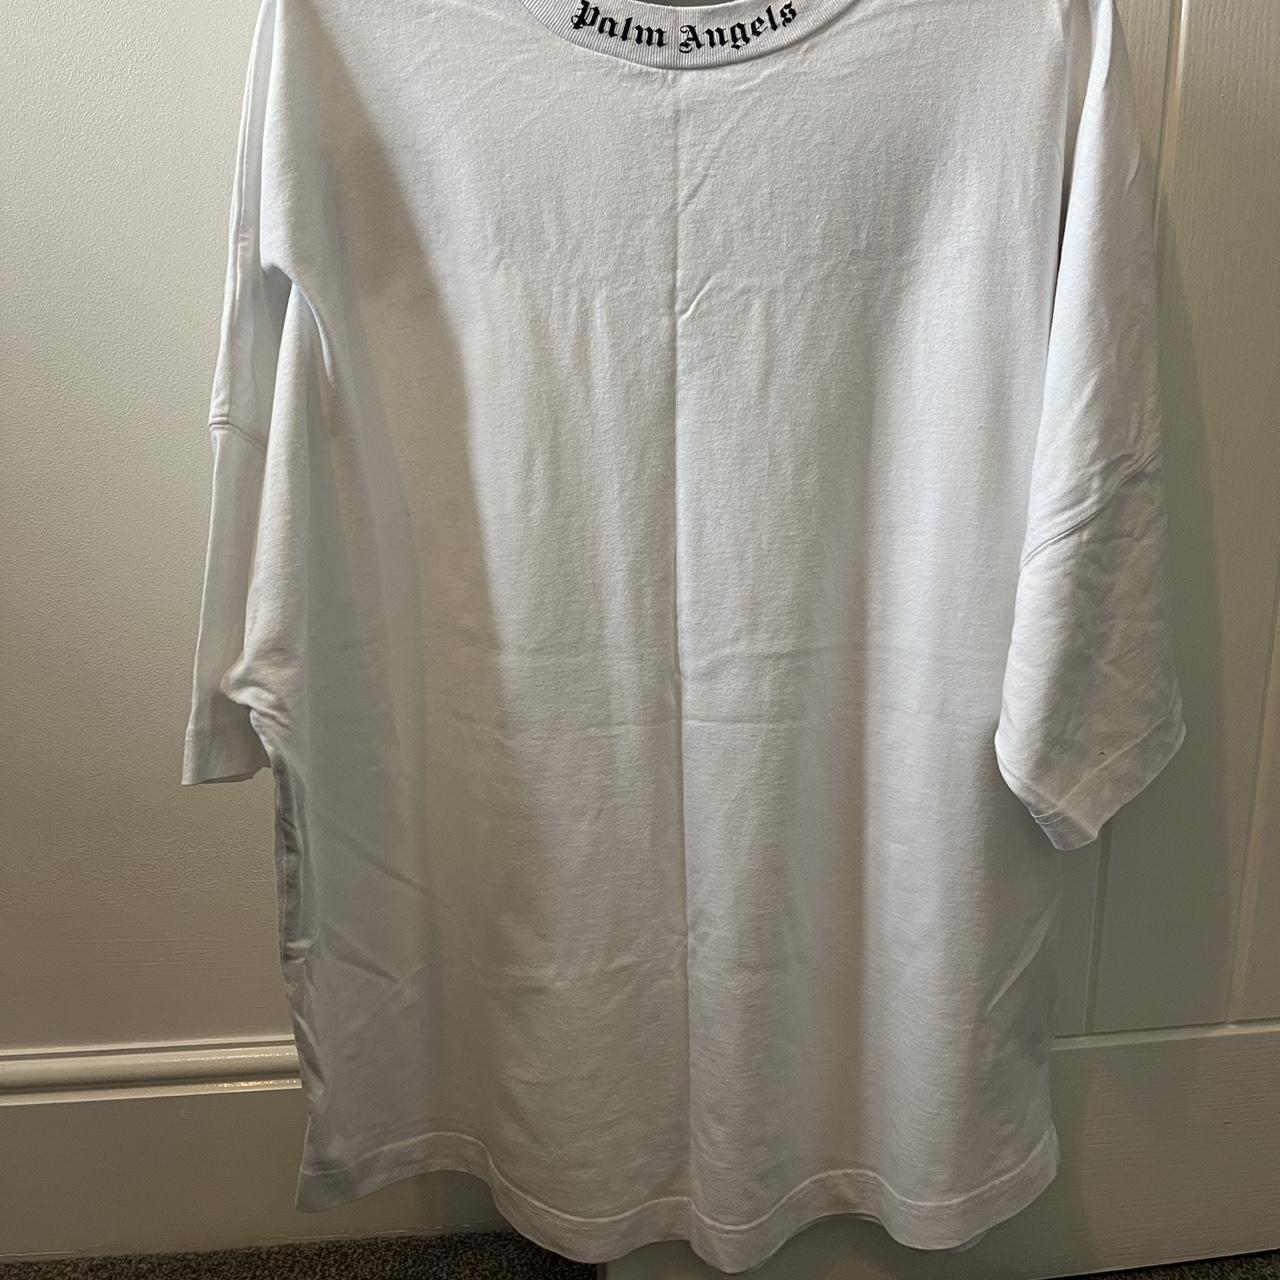 Authentic Palm Angels T-shirt Size XL Worn once - Depop